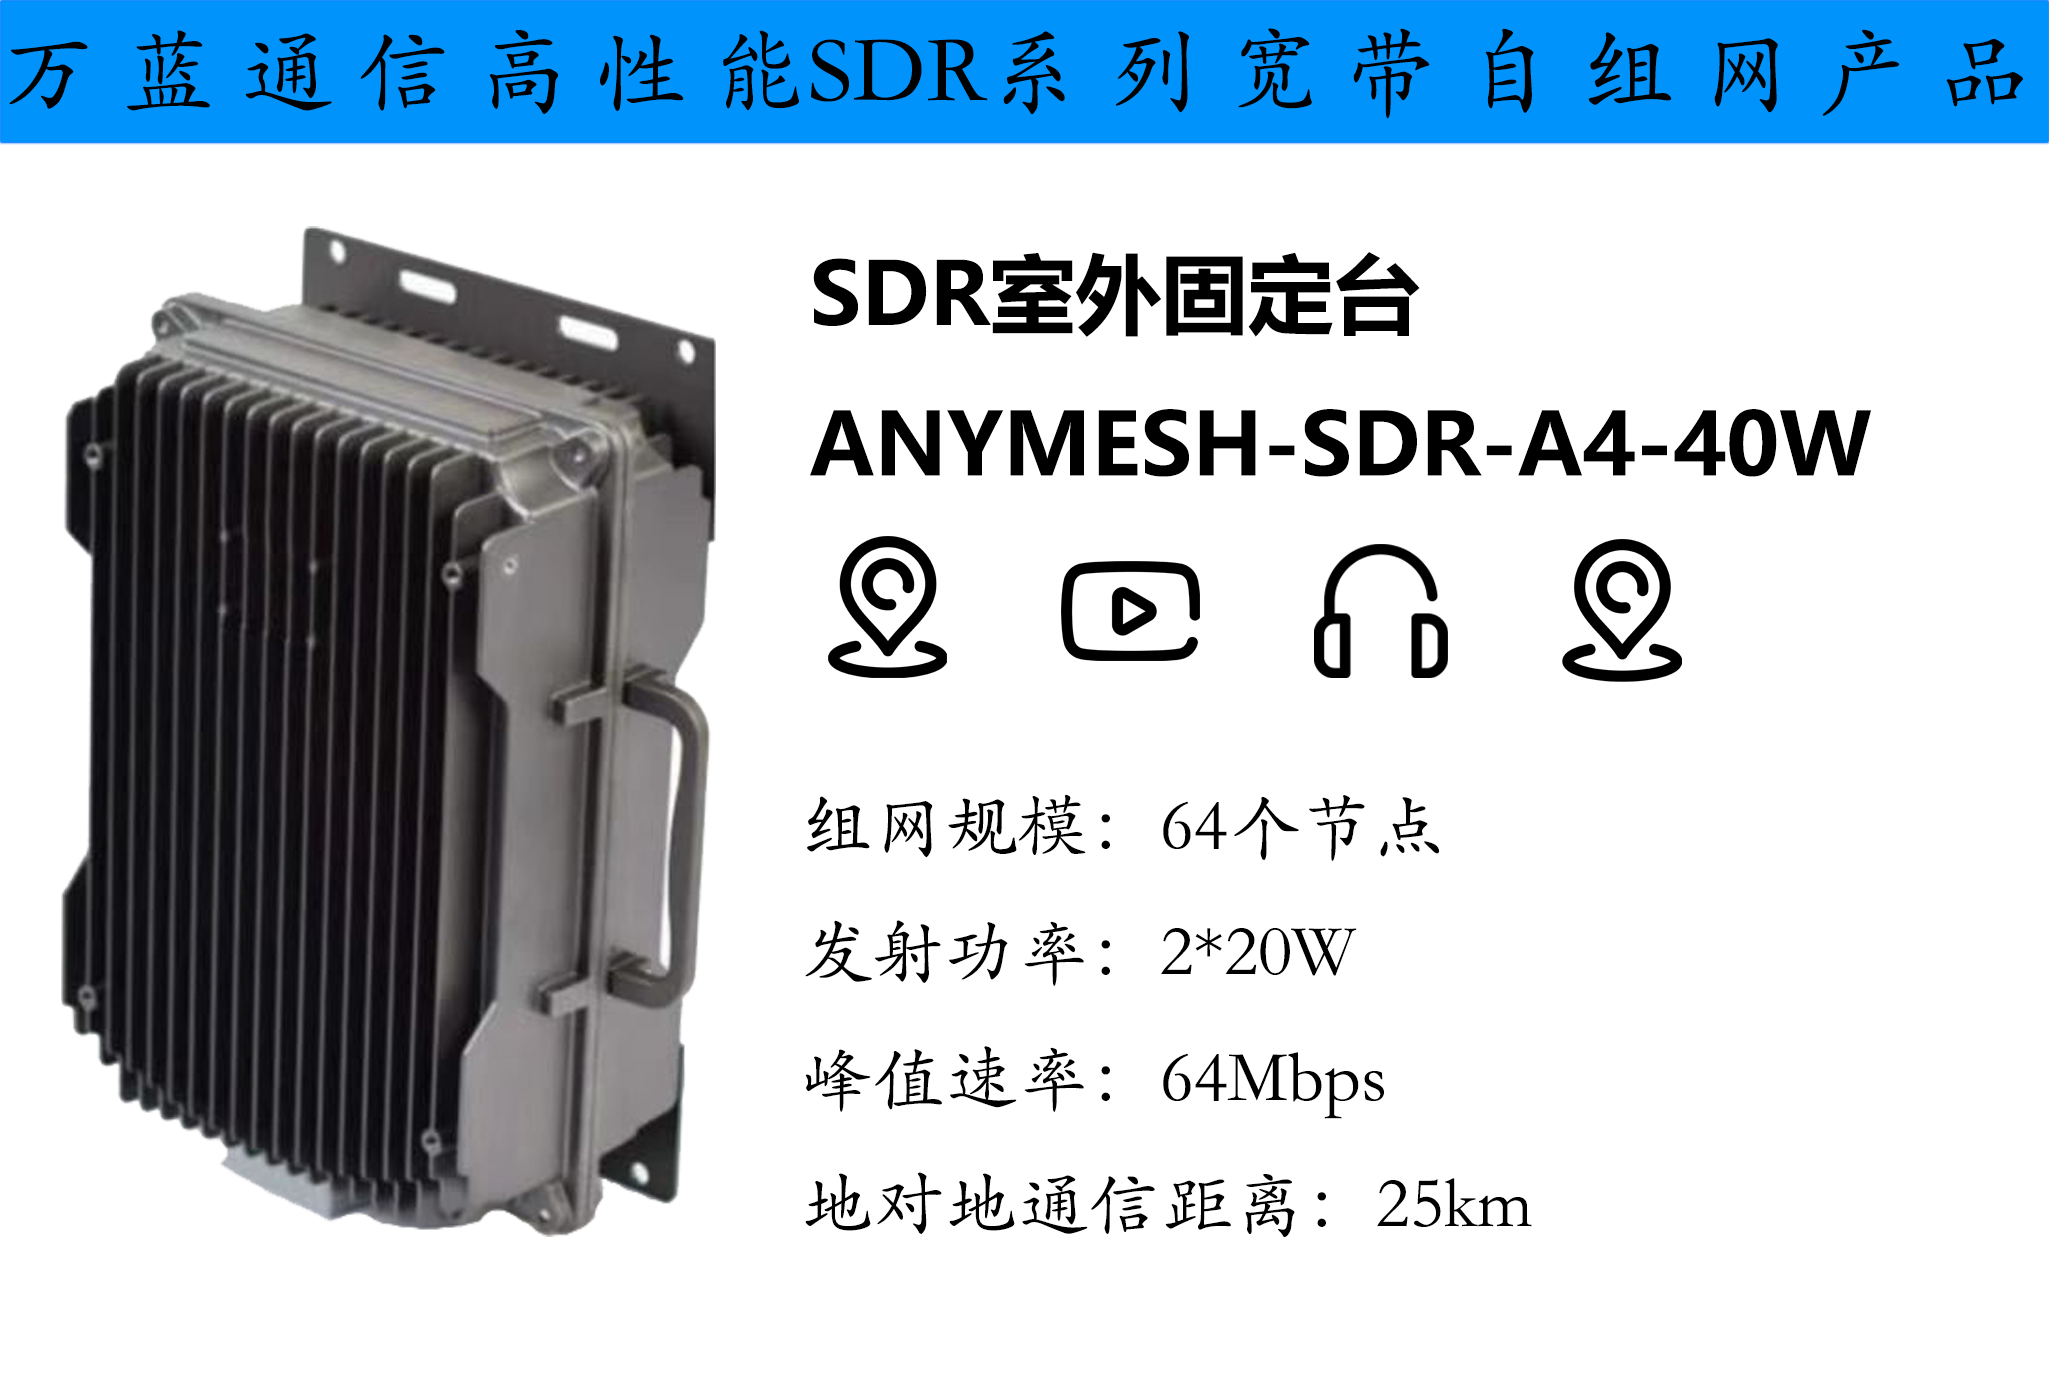 ANYMESH-SDR-A4-40W室外基站型自组网设备 自组网固定